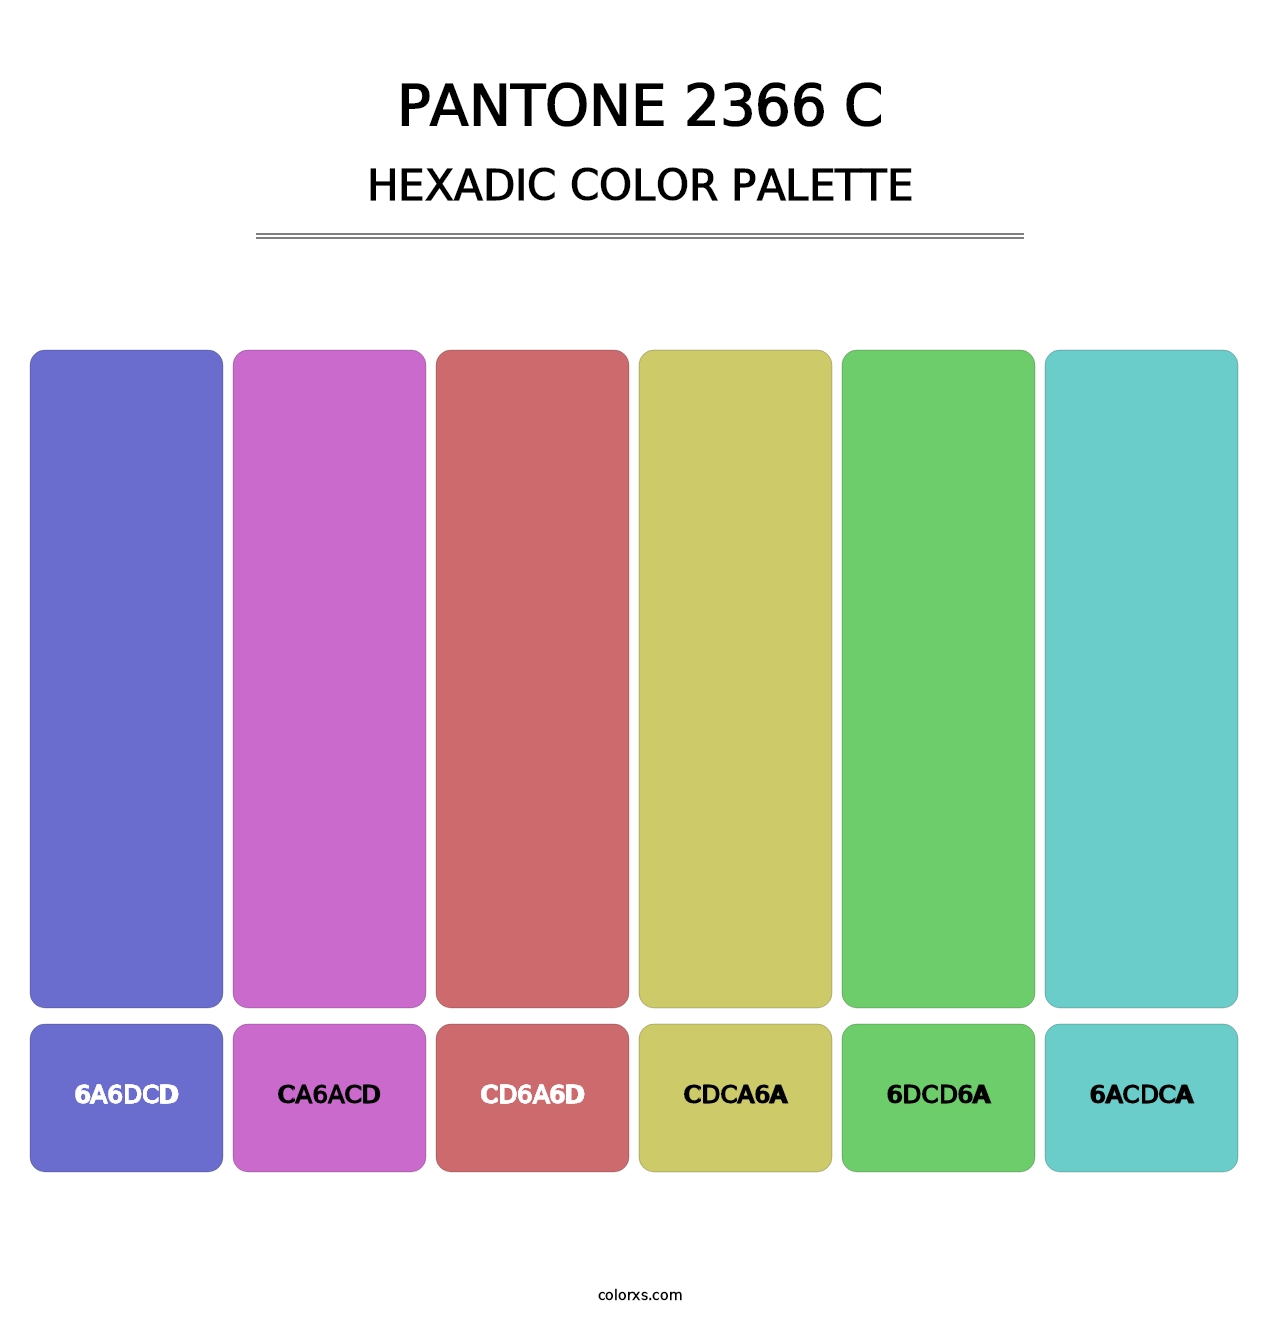 PANTONE 2366 C - Hexadic Color Palette